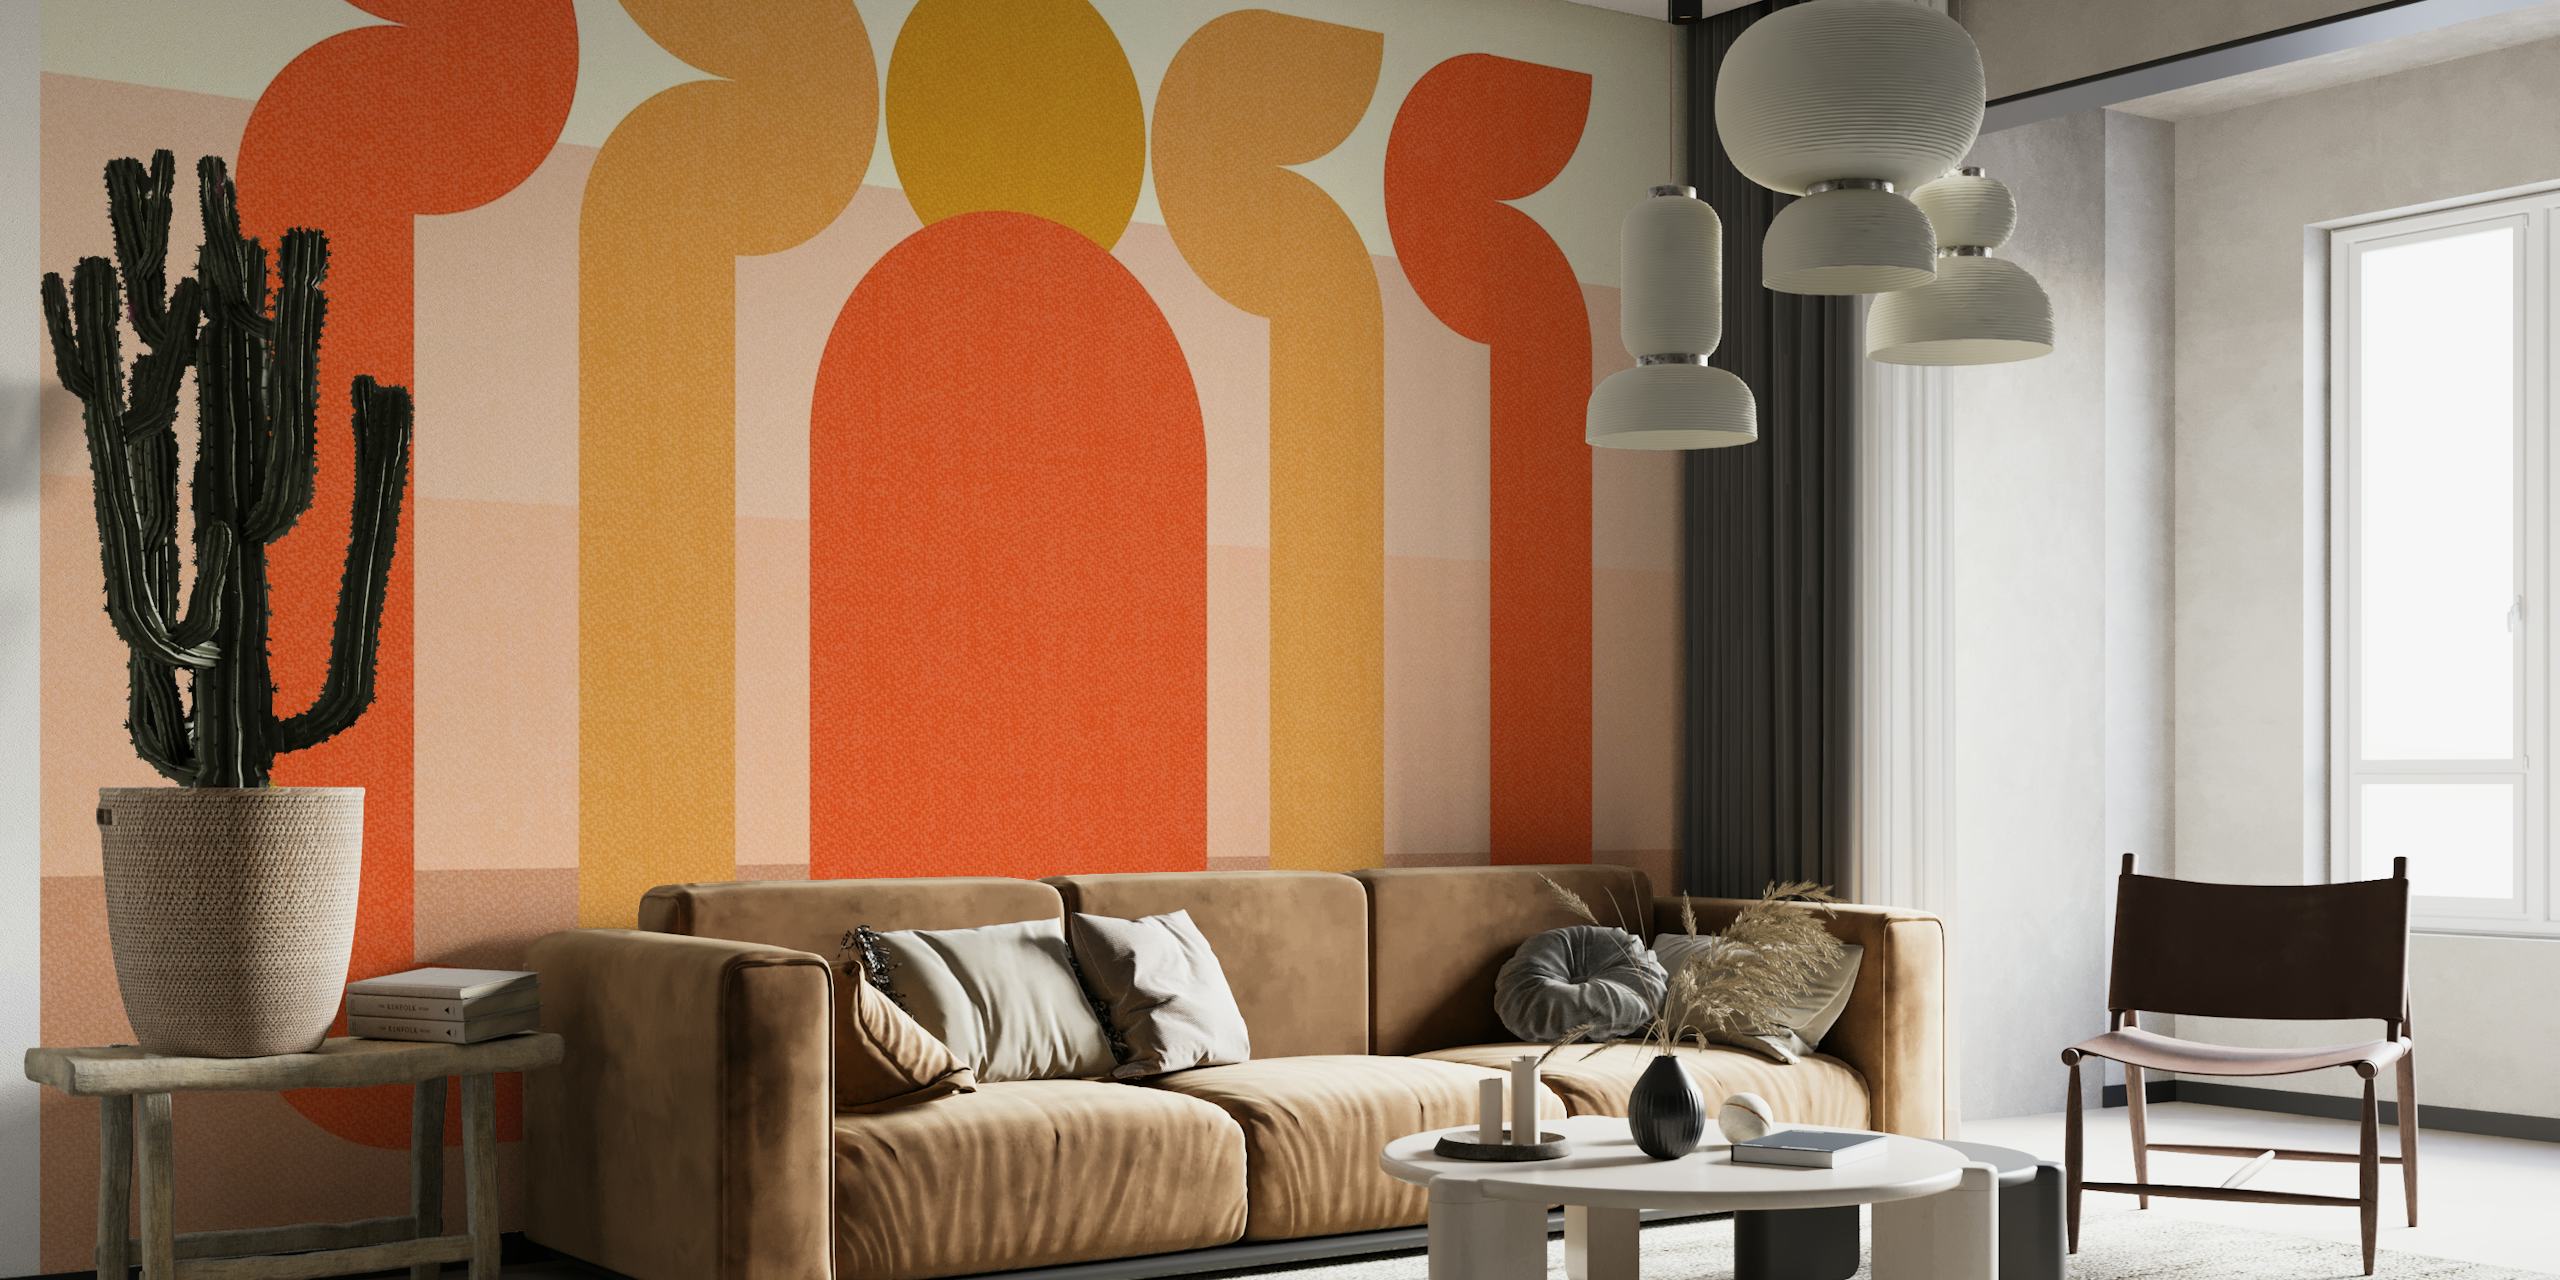 Mural de parede retro Sun minimalista com formas geométricas e cores pastel